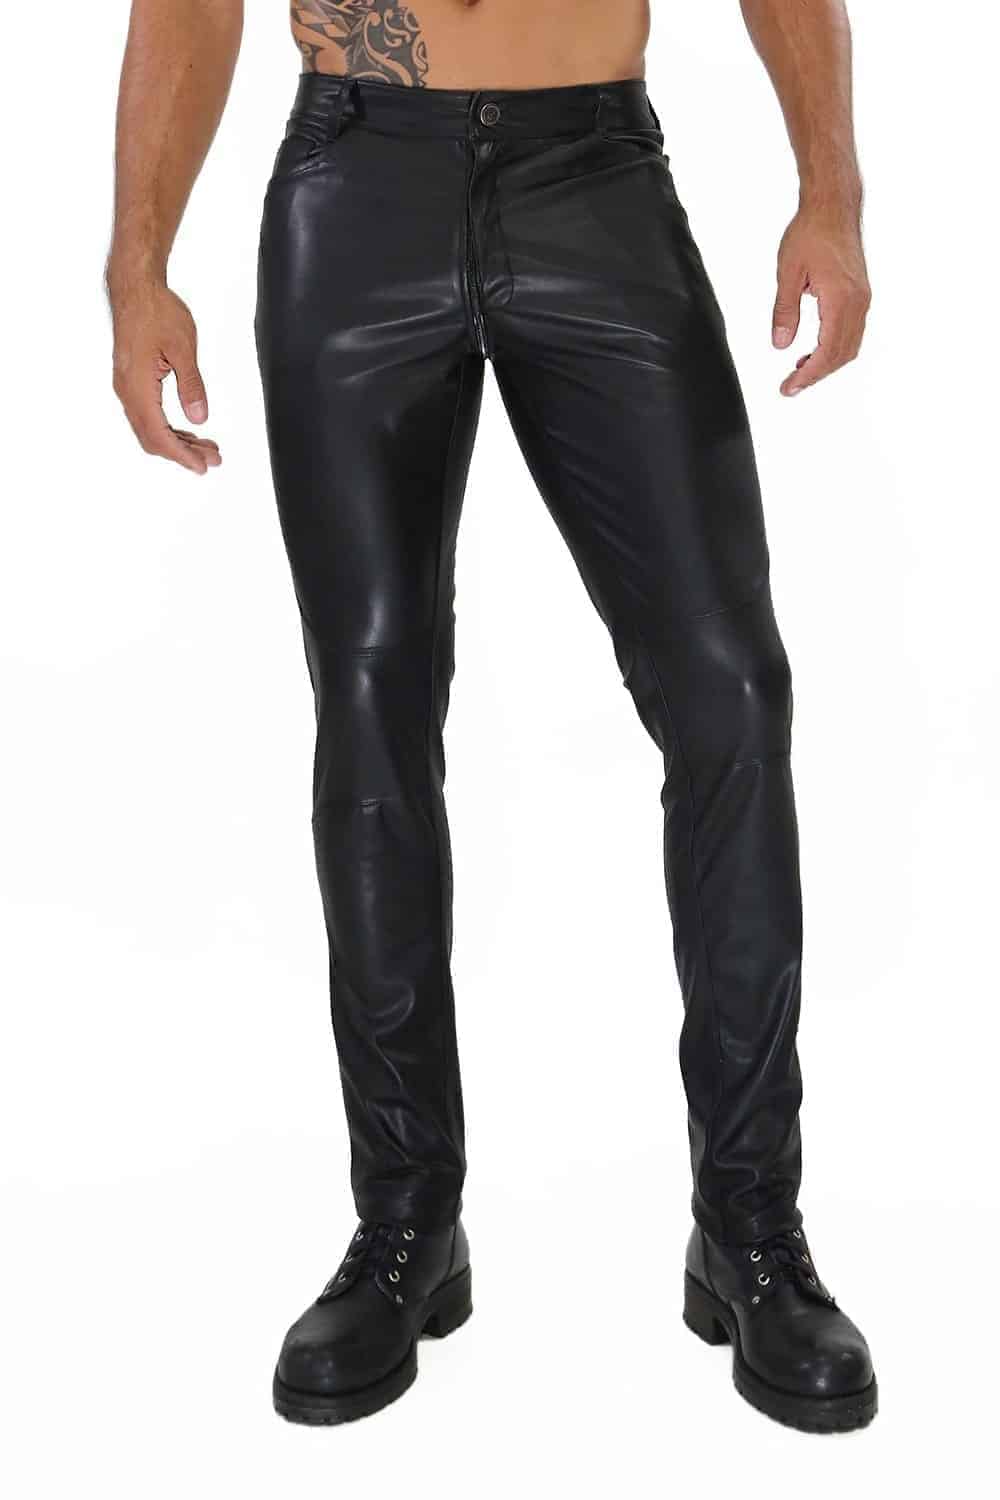 TOF Paris Fetish Full Zip Pants - Leatherette Design with Full Zipper